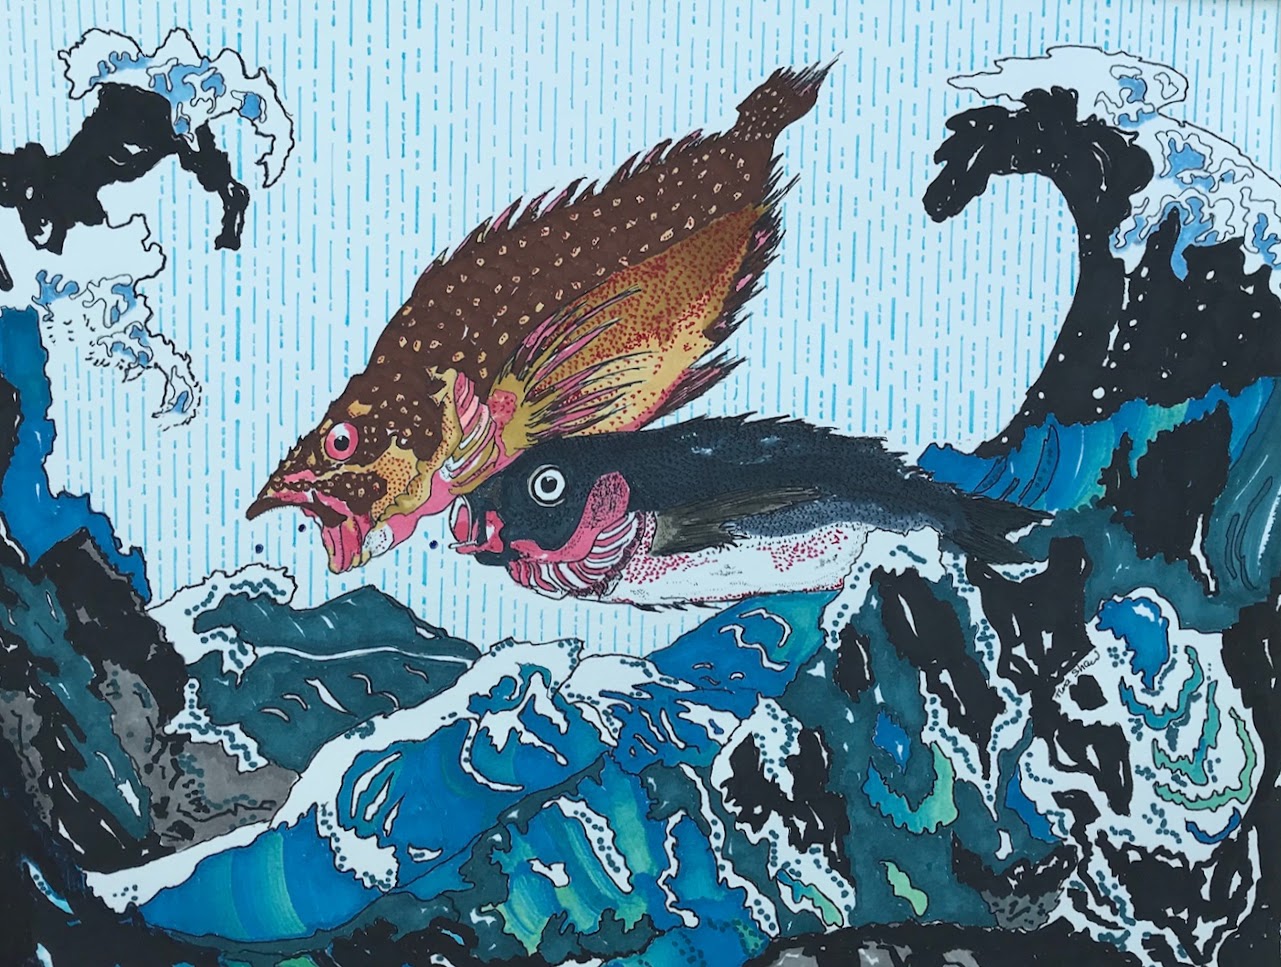 Adaptation of Hiroshige's Scorpion and Isaki fish by Tina Shaw